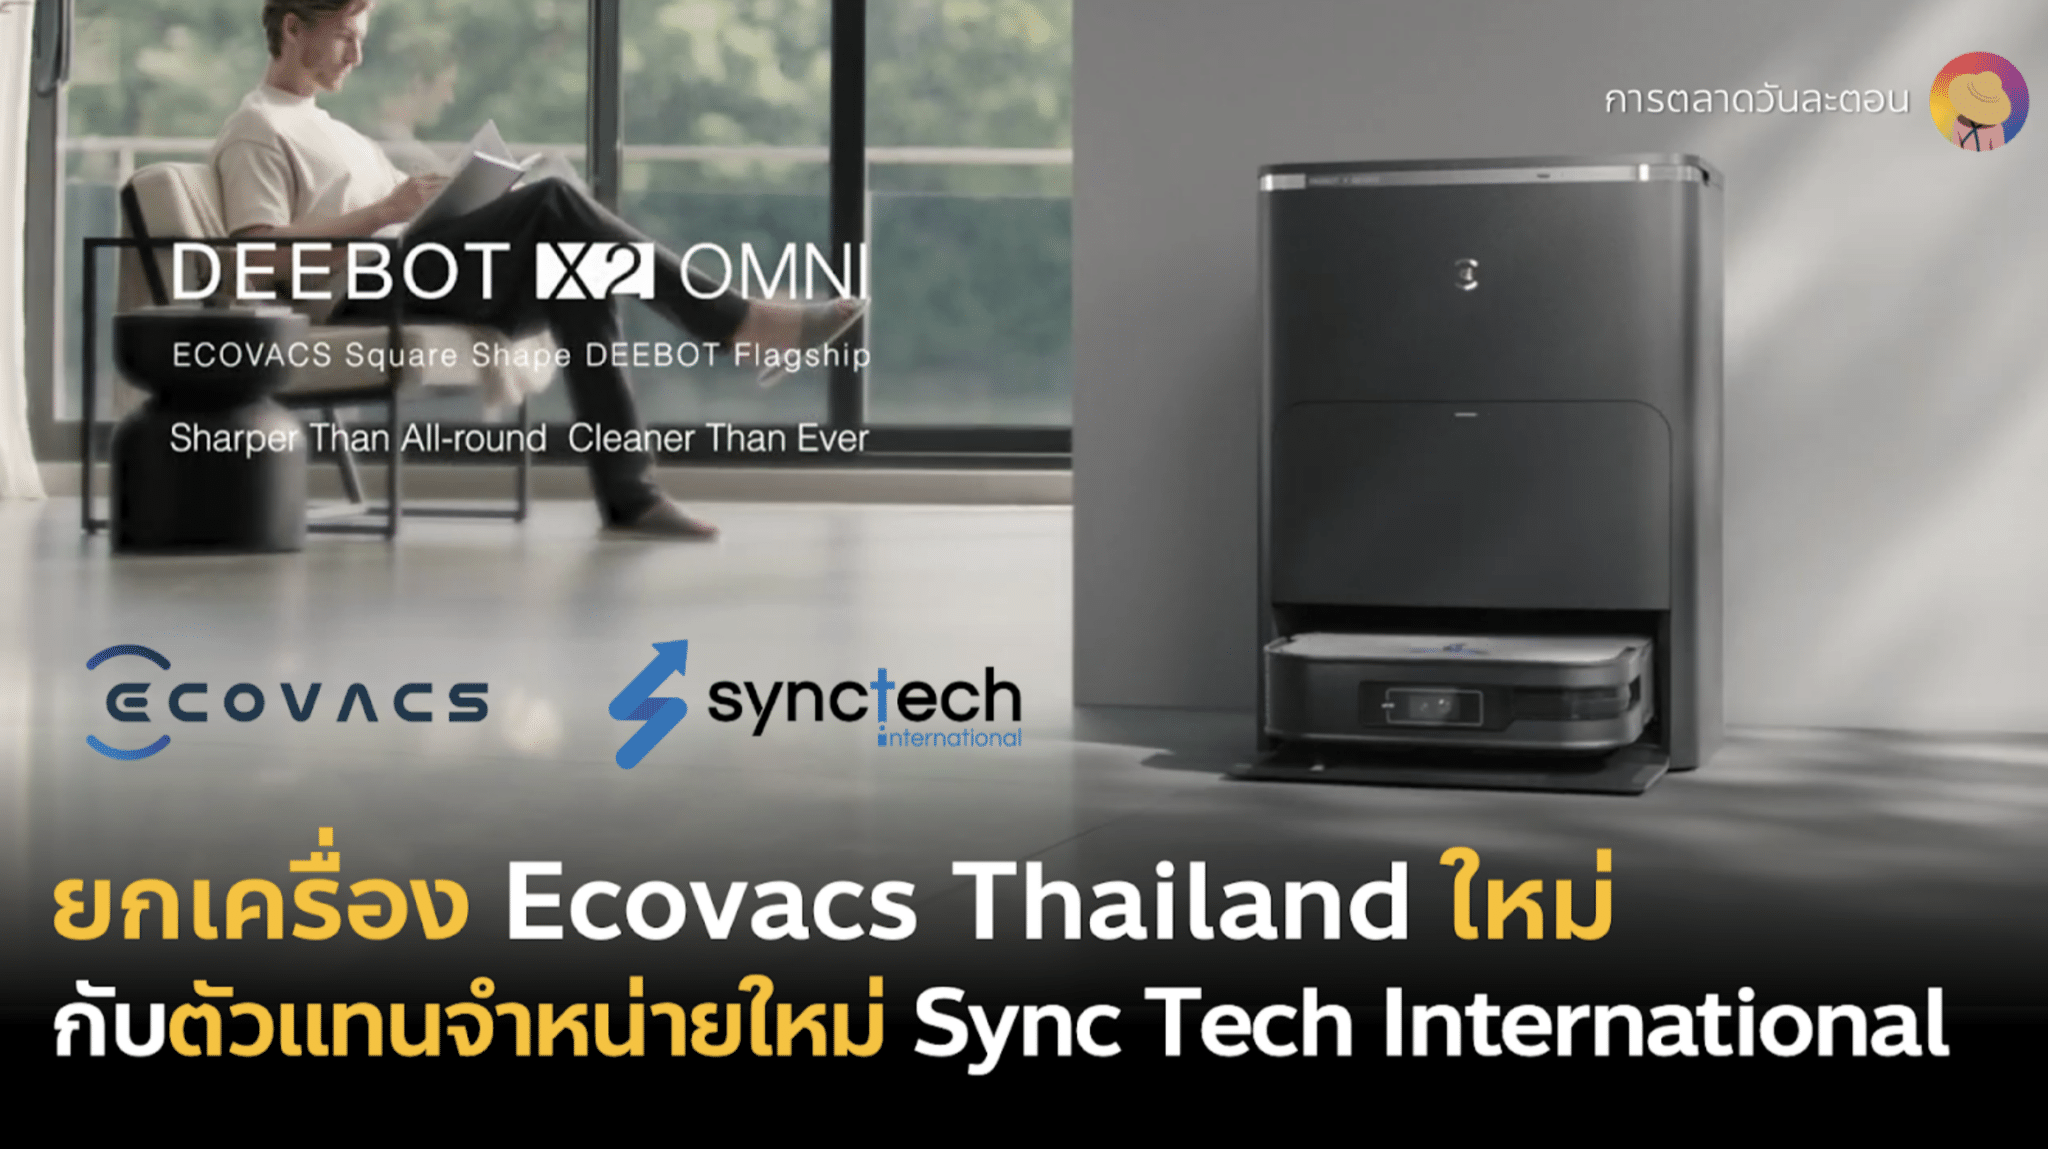 Ecovacs Thailand ภายใต้ตัวแทนใหม่ Sync Tech International มั่นใจในบริการหลังการขายนับจากนี้